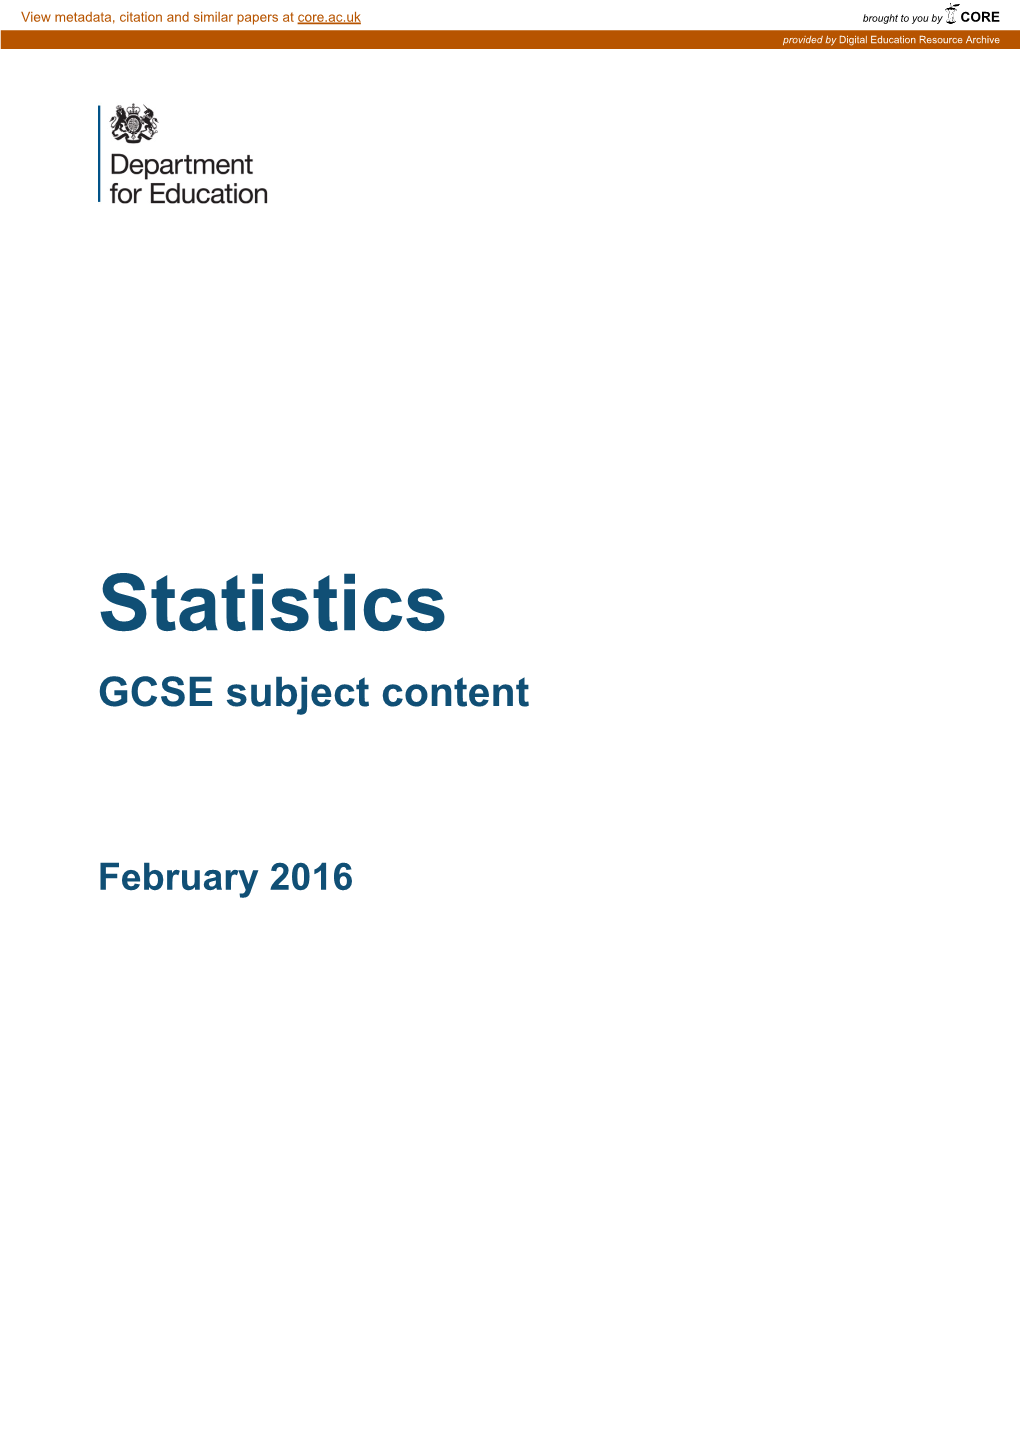 Statistics GCSE Subject Content